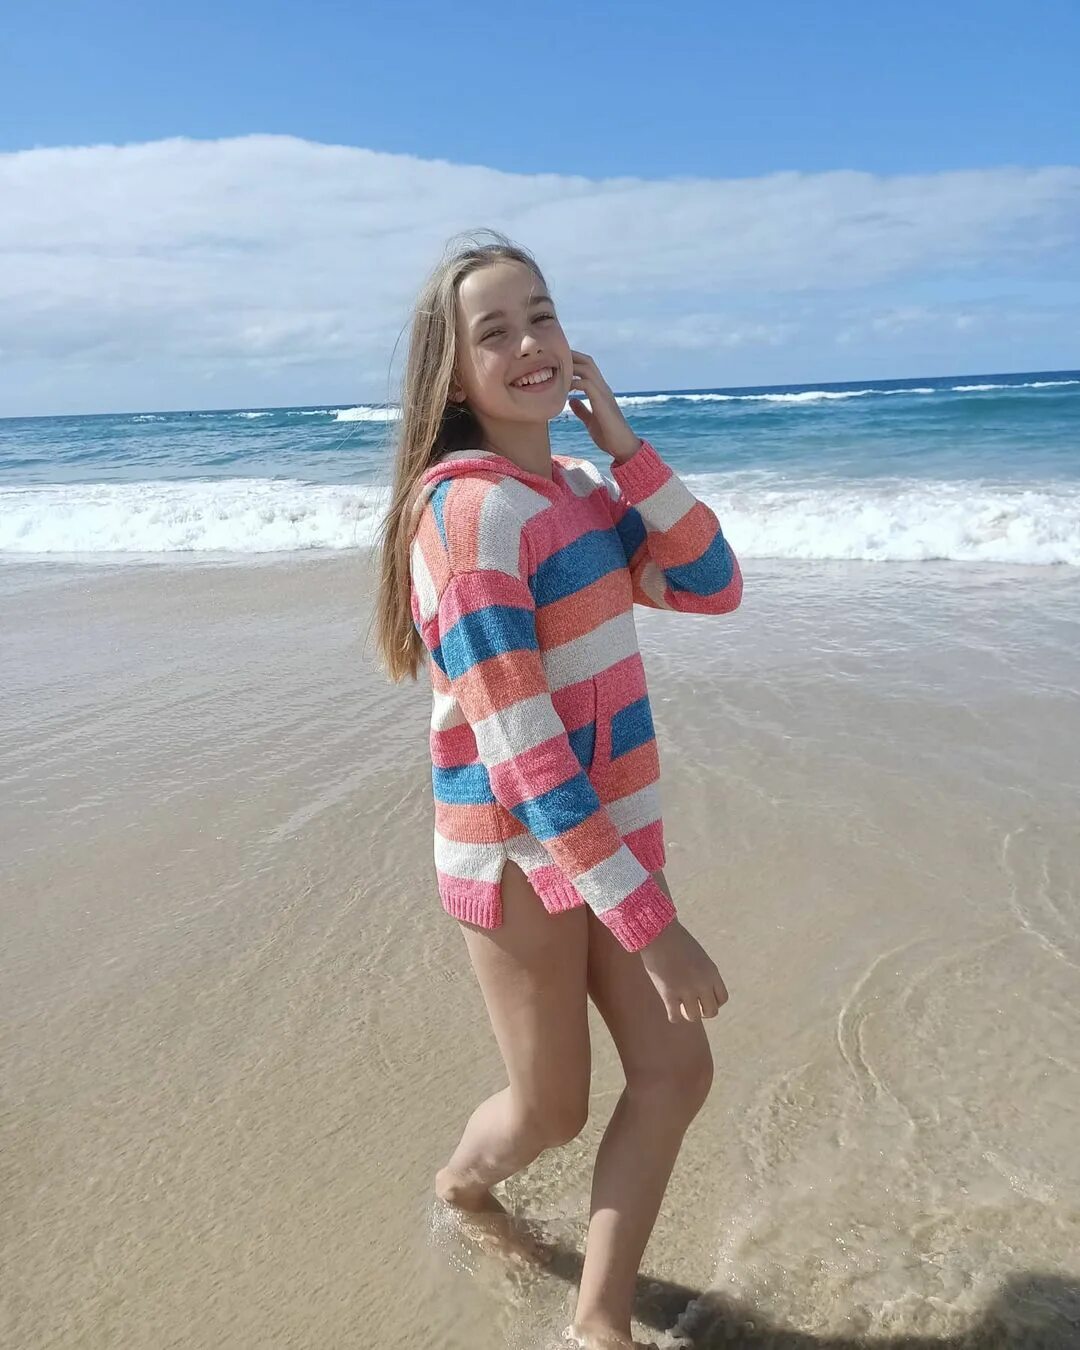 EMILIA DANIELLE в Instagram: "Don't worry, beach happy 🌊 . . 